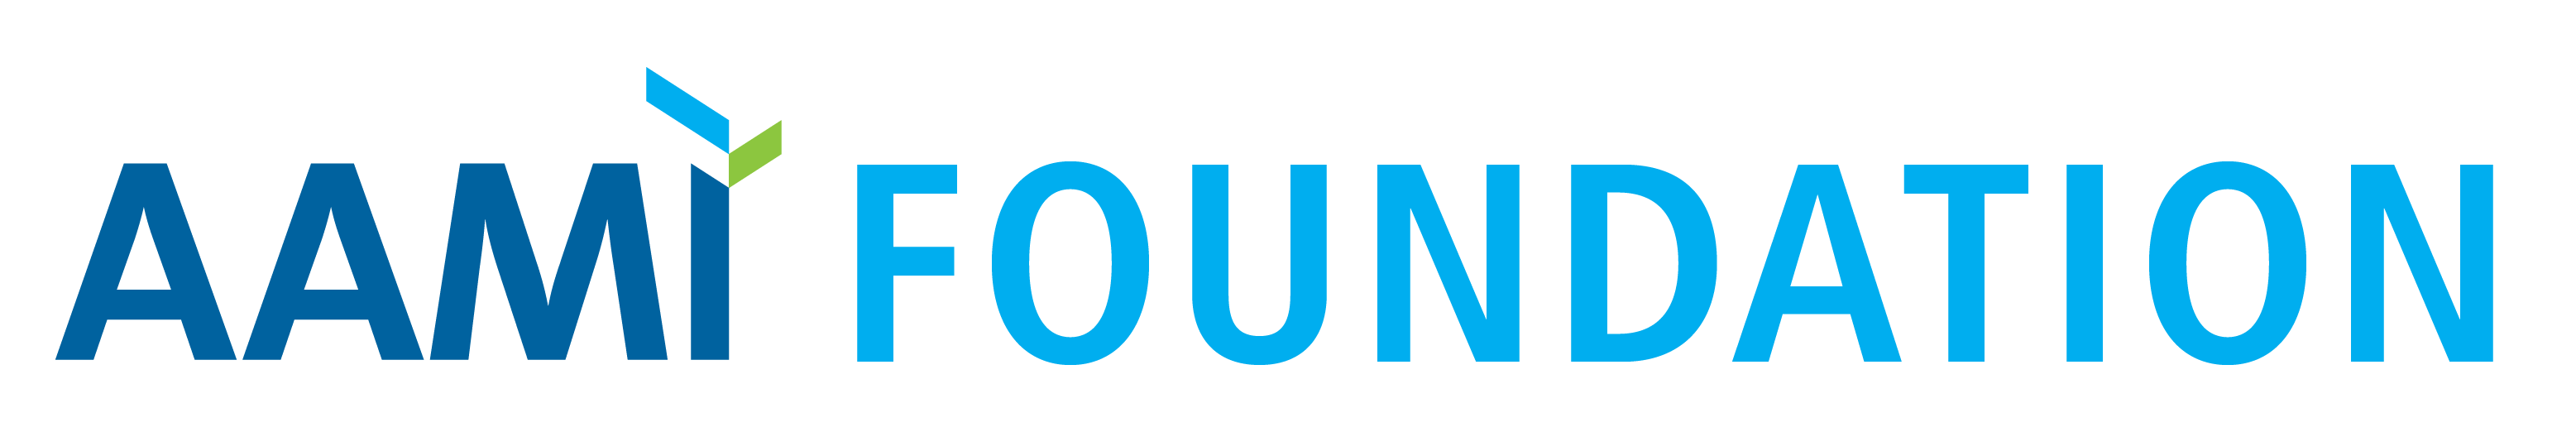 aami foundation logo